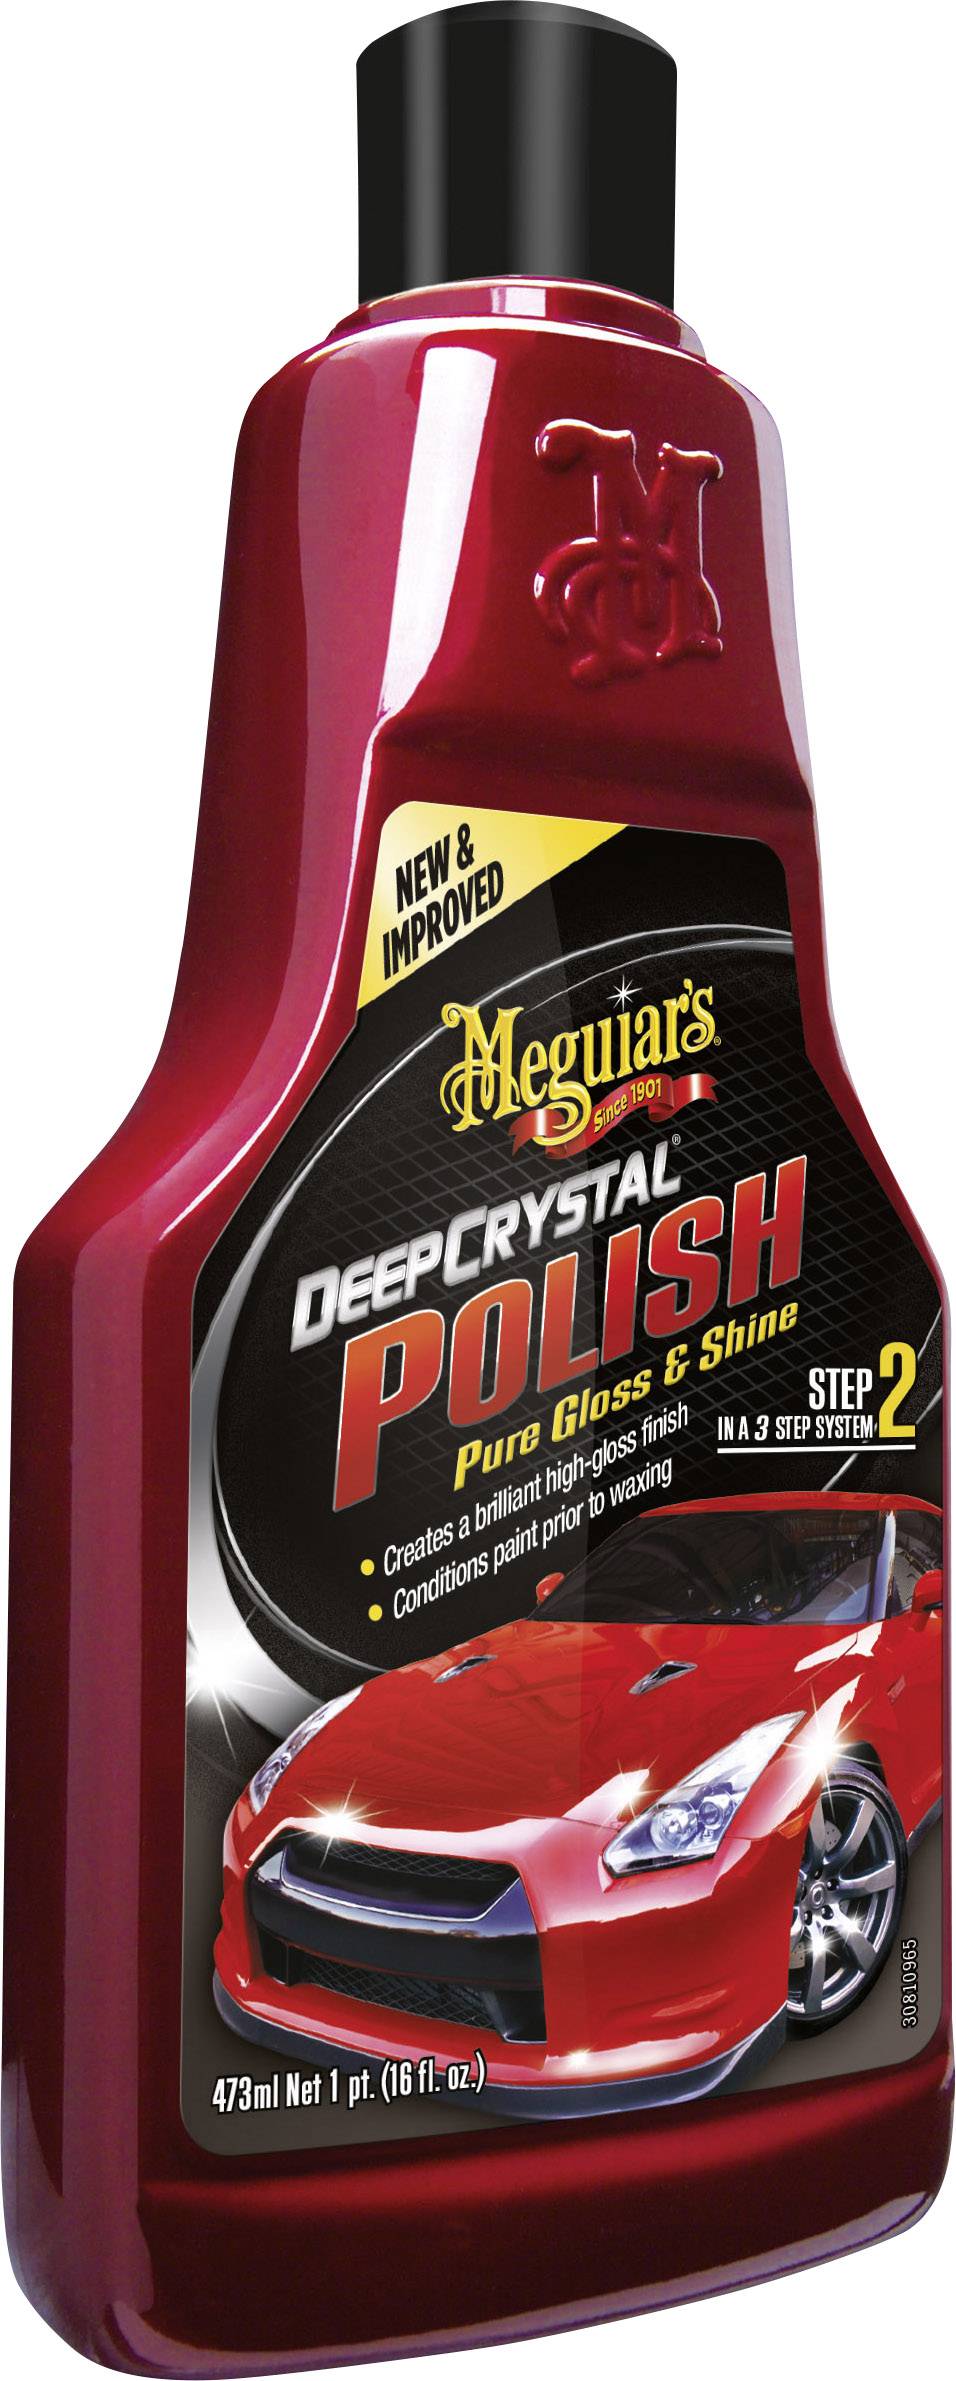 Buy Meguiars Deep Crystal Polish Step 2 A3116EU Car polish 473 ml